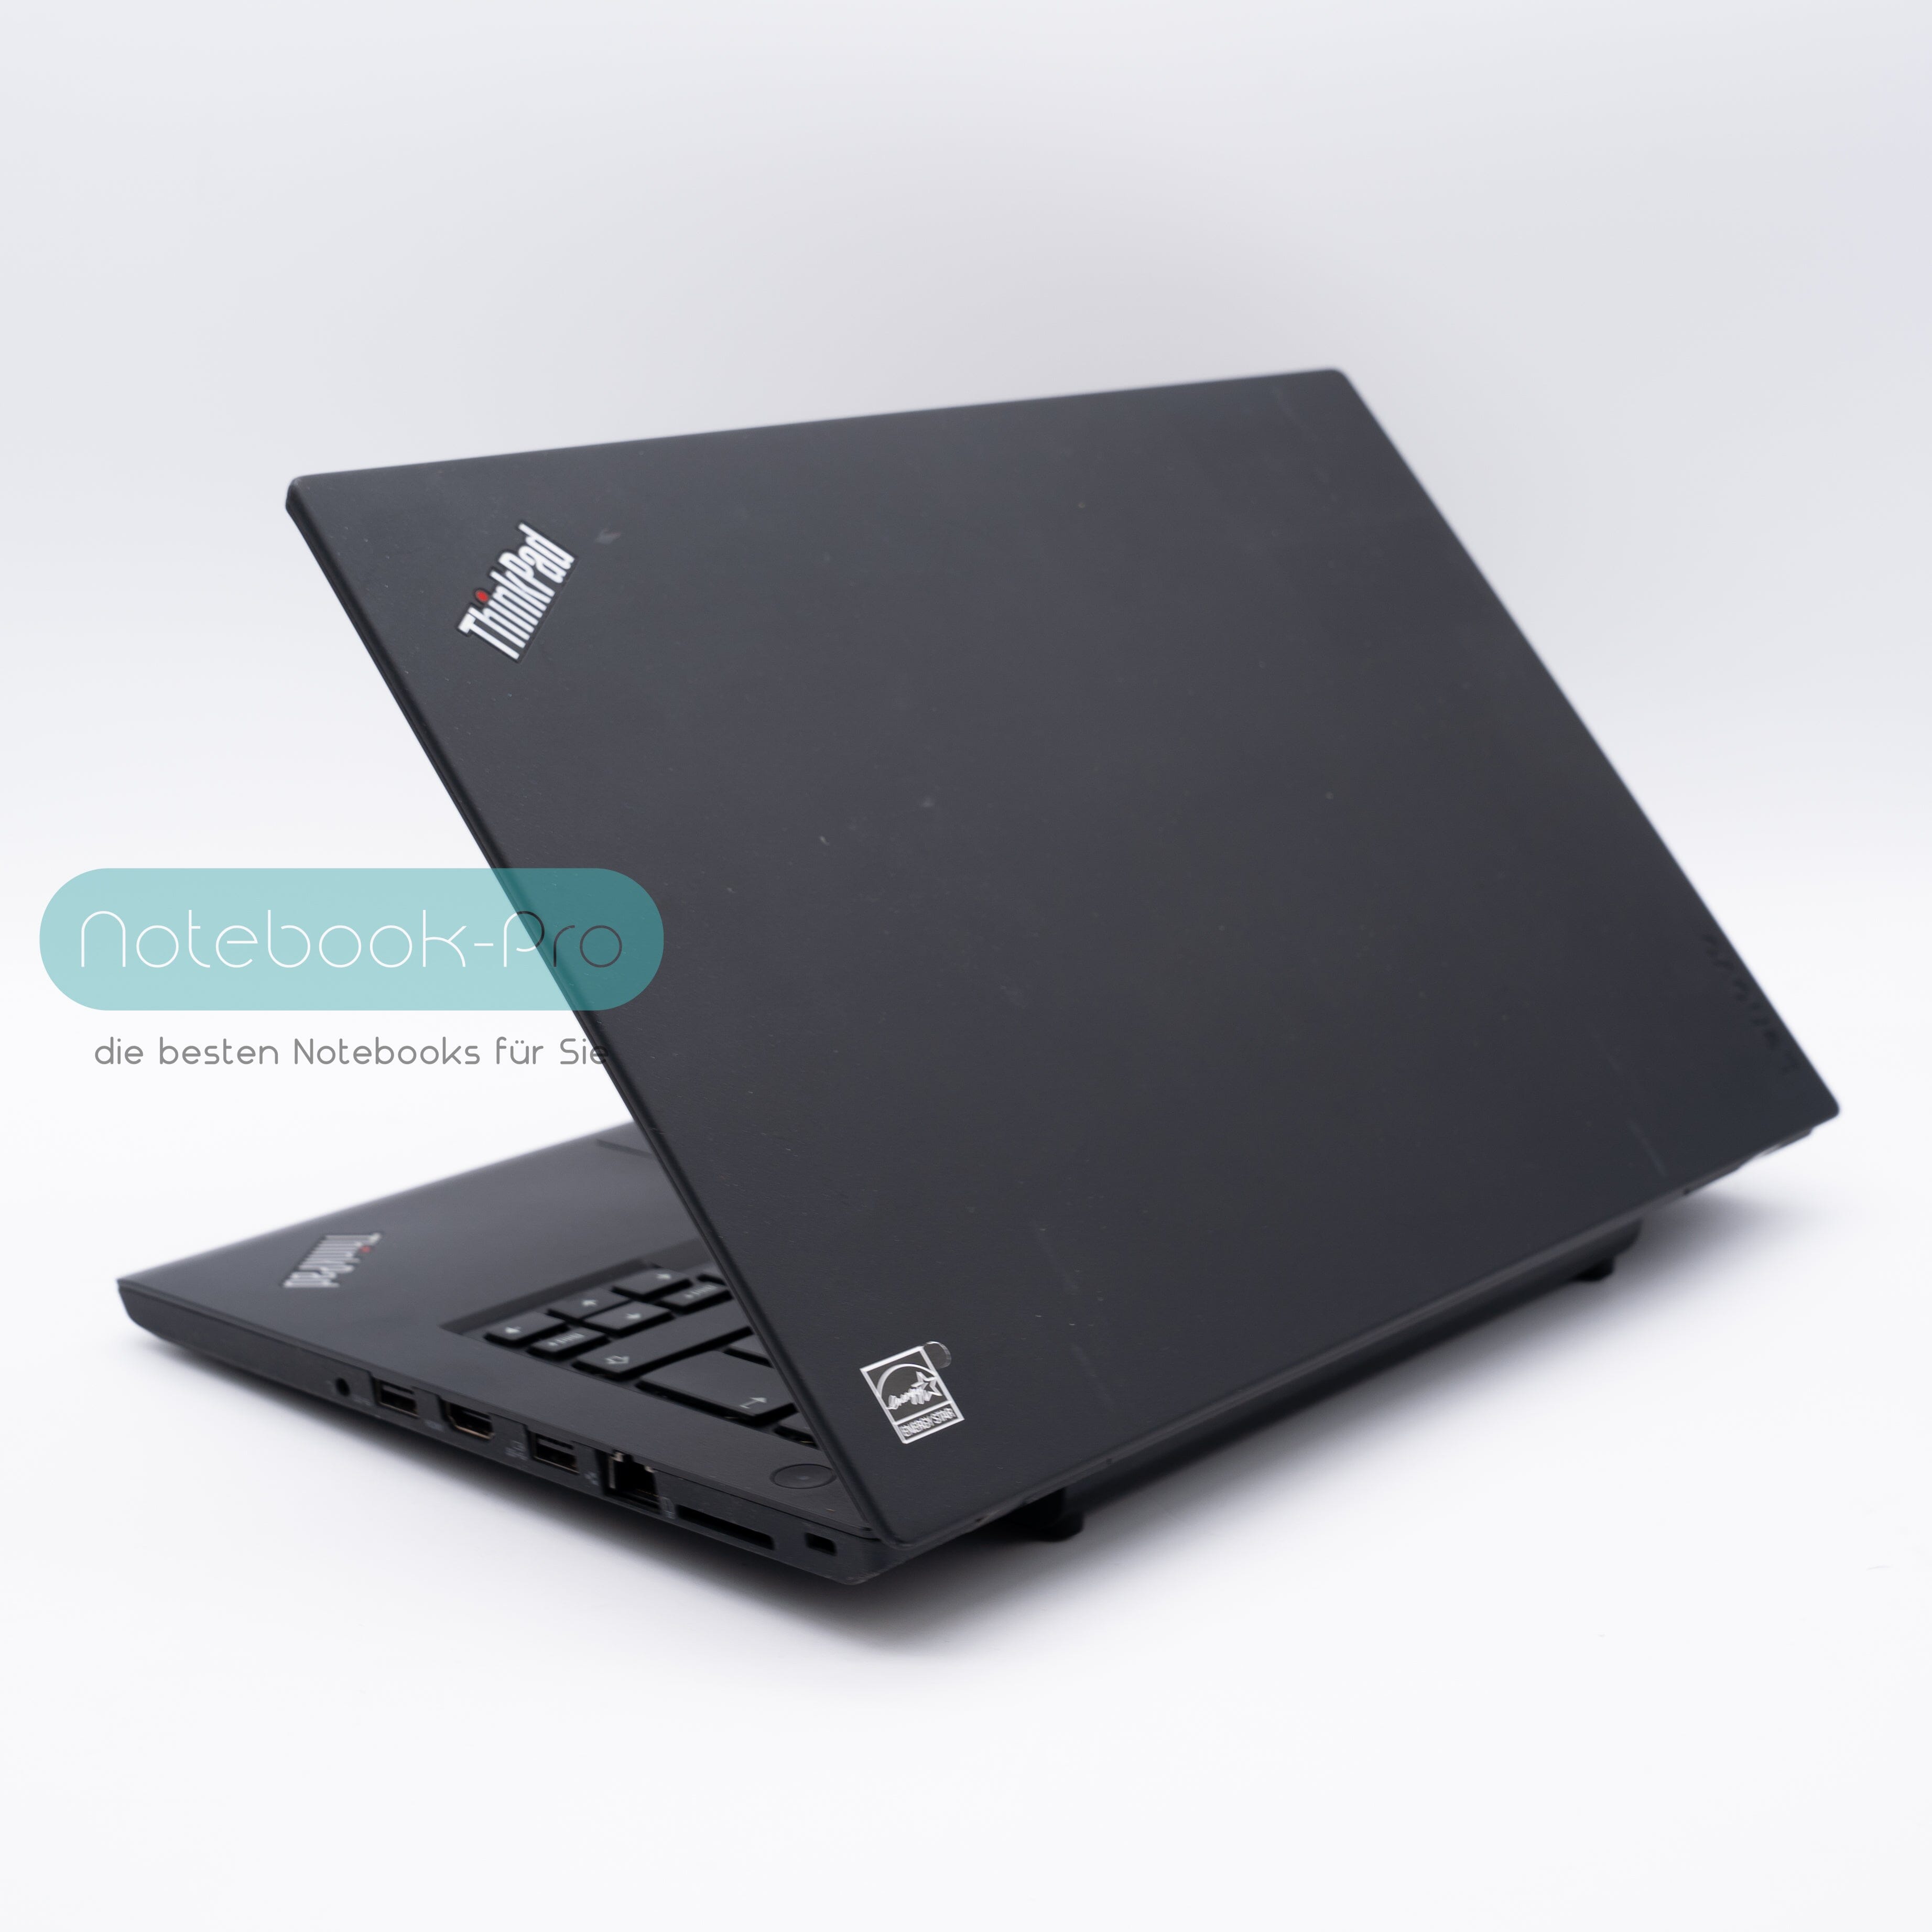 Lenovo ThinkPad T480 Touch i5-8350U 16GB DDR4 256GB NVMe WIN11 Pro Laptops Notebook-Pro 